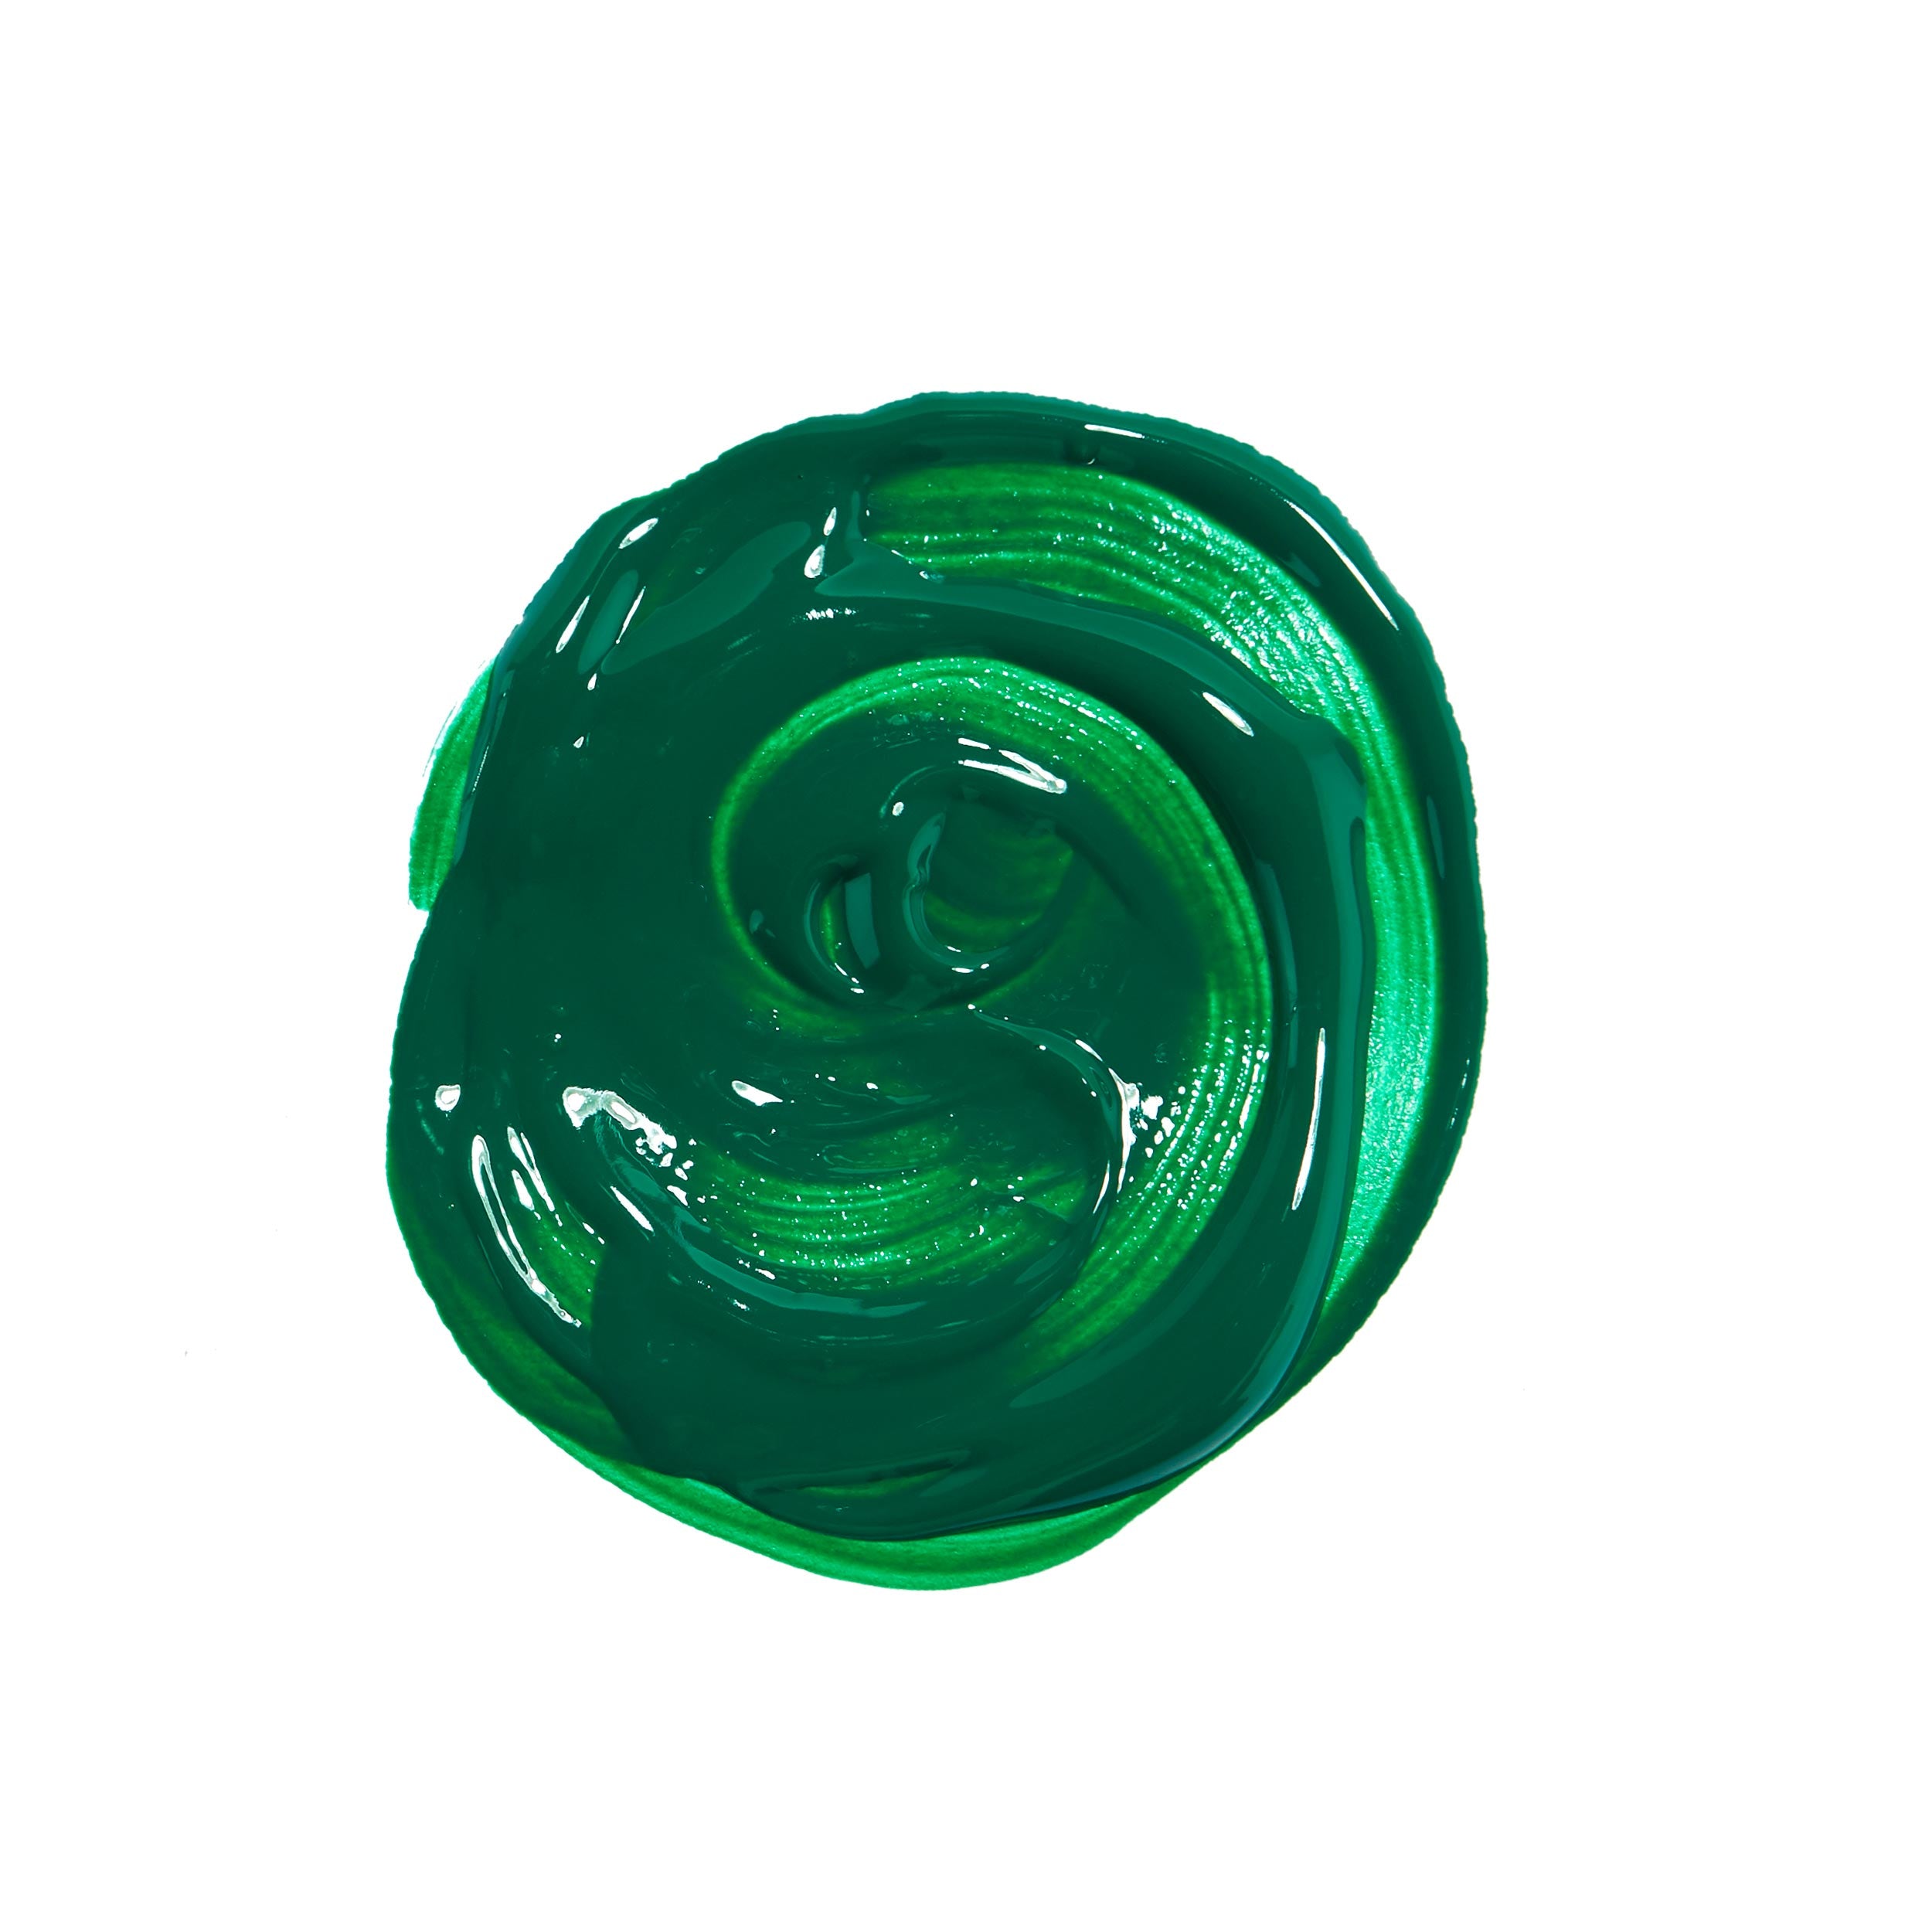 Buy #177 Phthalo Green (Yellow Shade) - Lightfastness:, - Transparent  Online